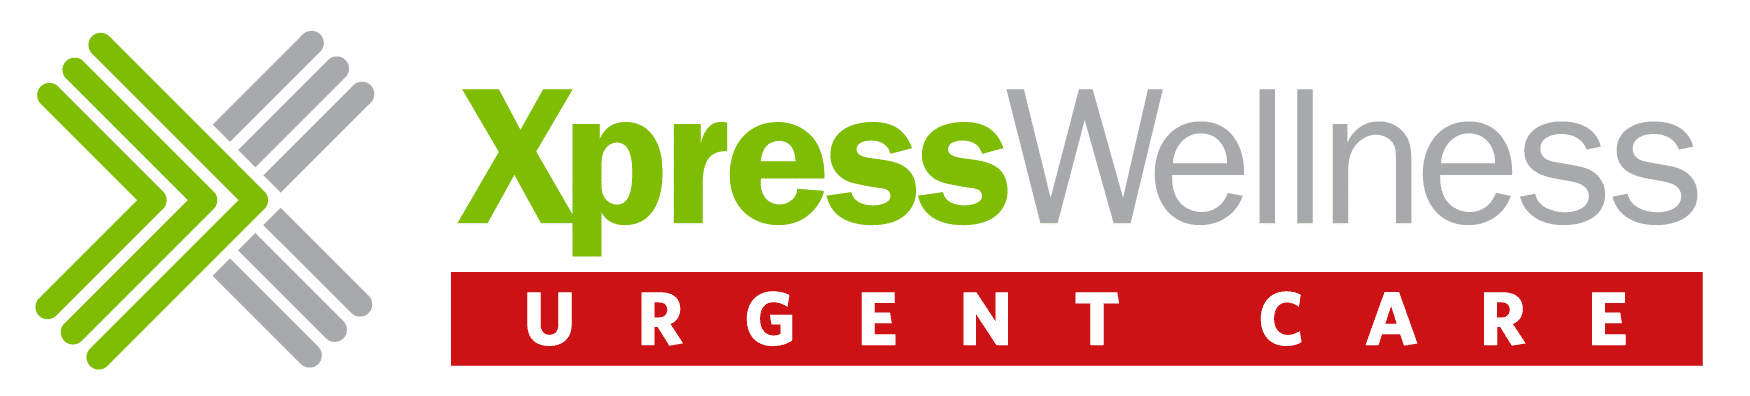 Xpress Wellness Urgent Care Logo